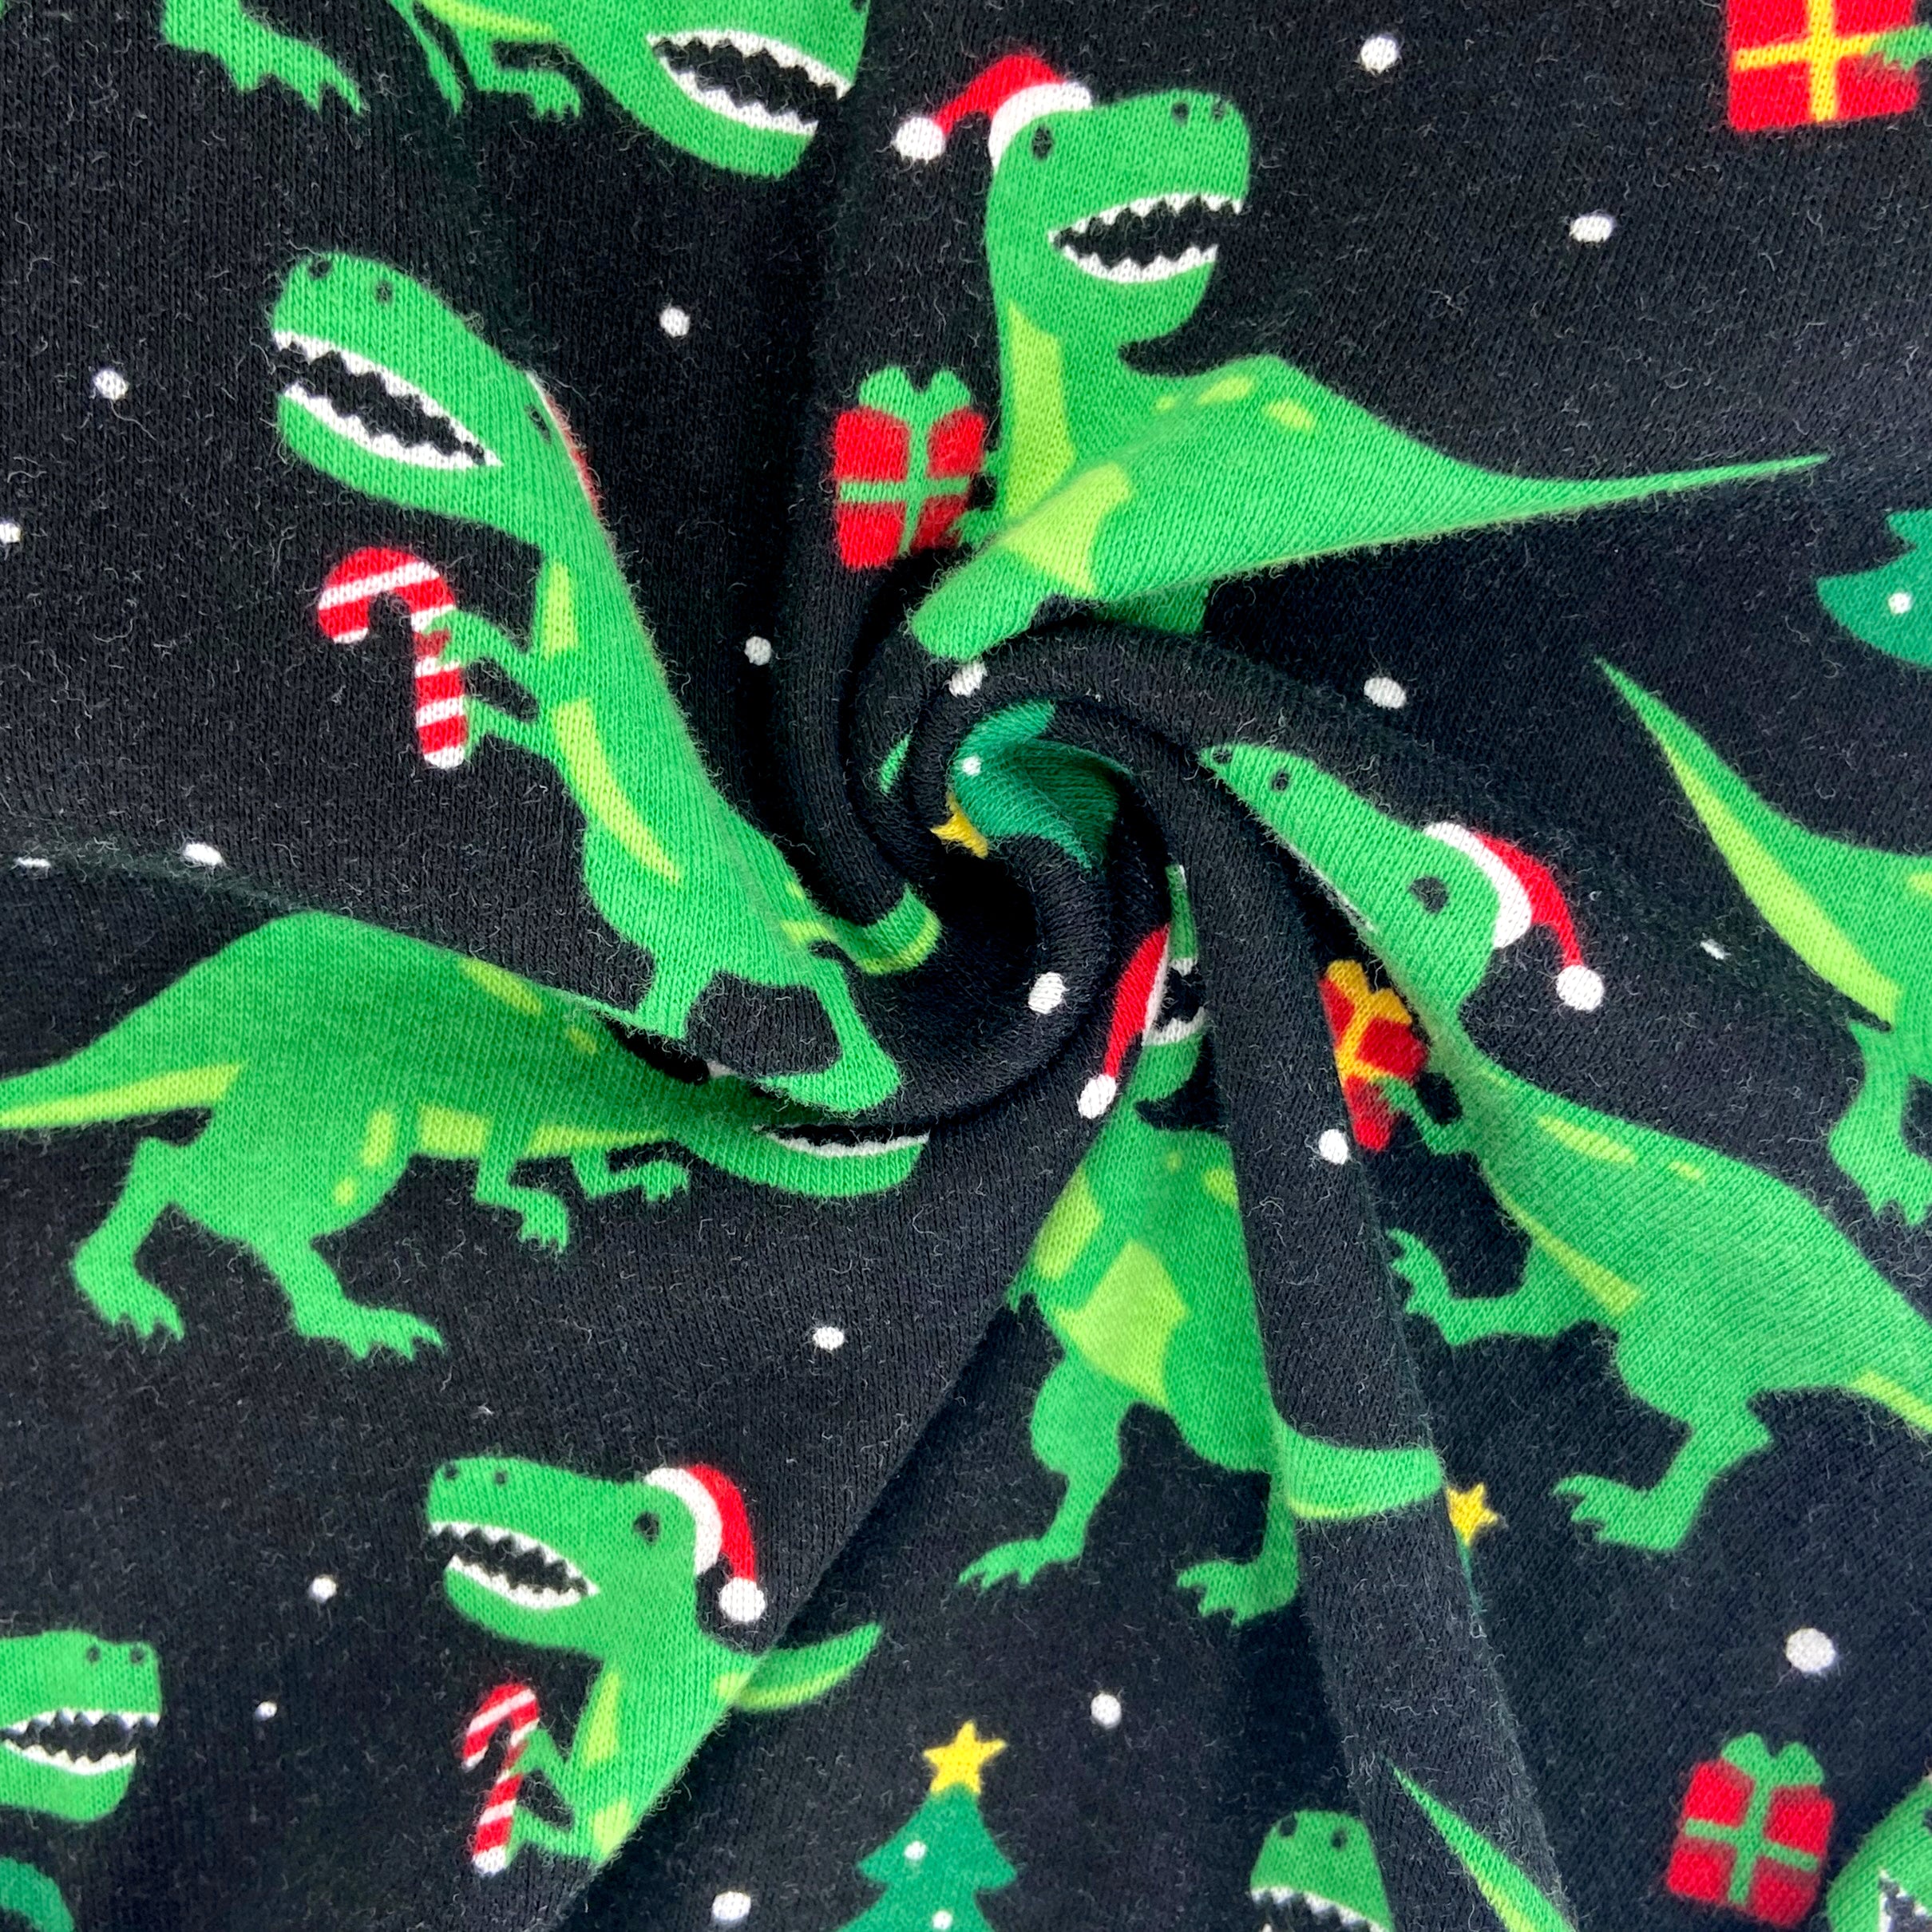 Festive T-Rex Dinosaurs in Santa Hats Print Long Christmas PJ Pants